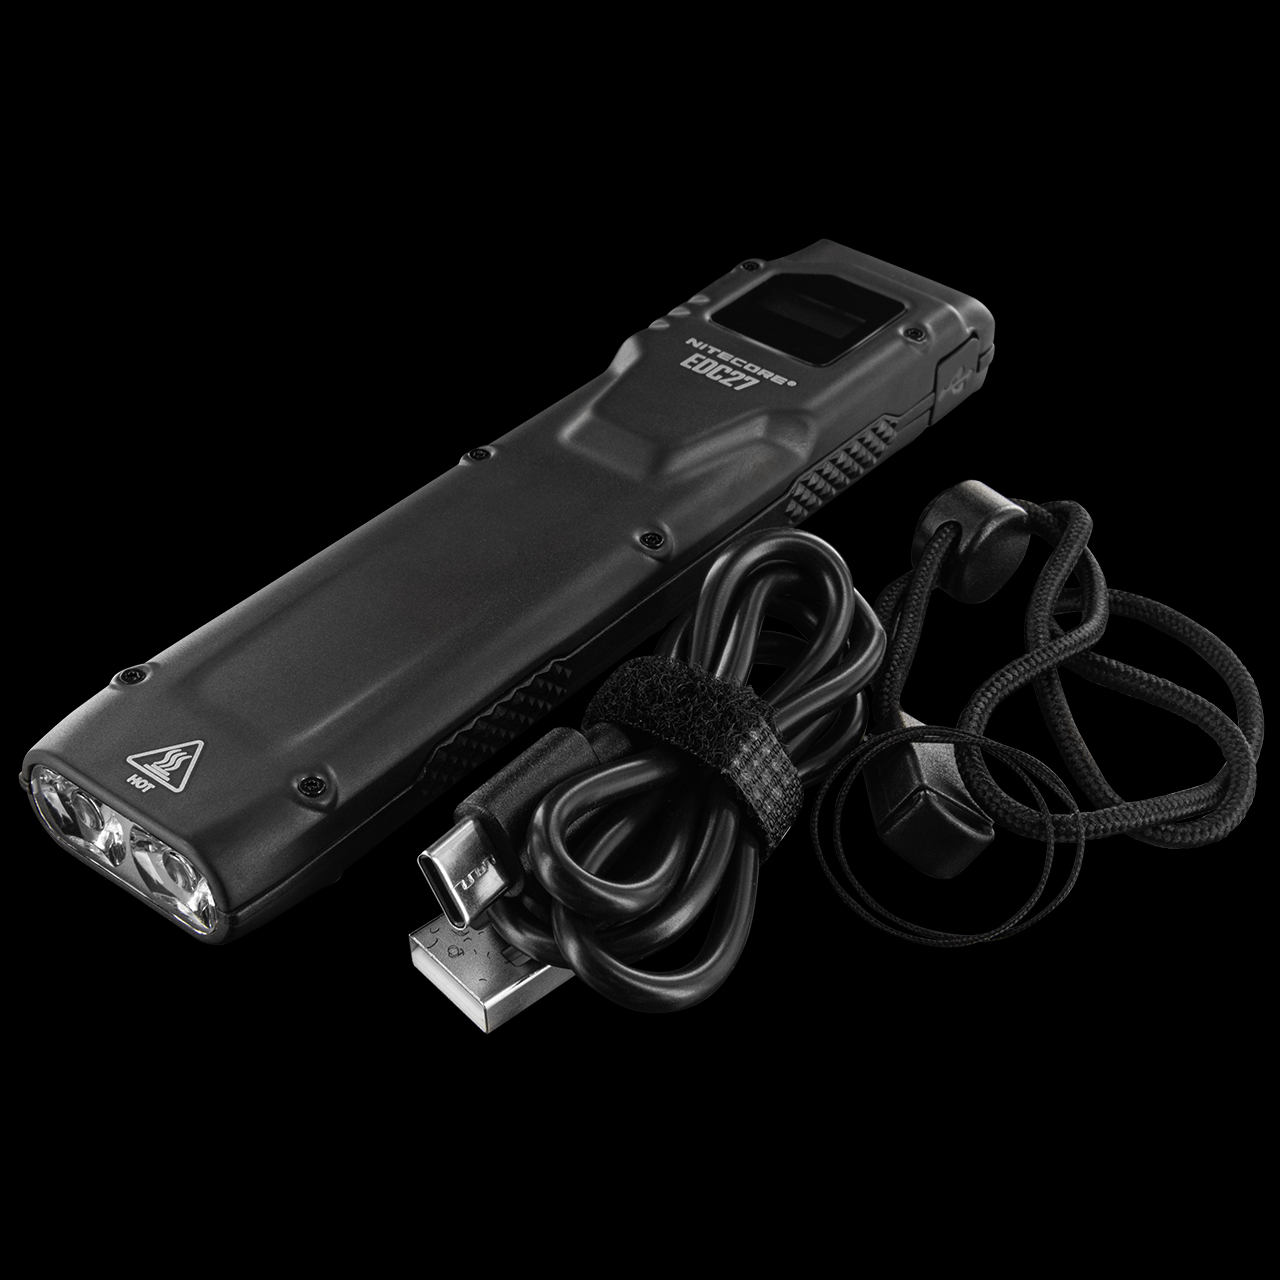 NITECORE EDC27 USB-C Rechargeable Flashlight Tactical Mini